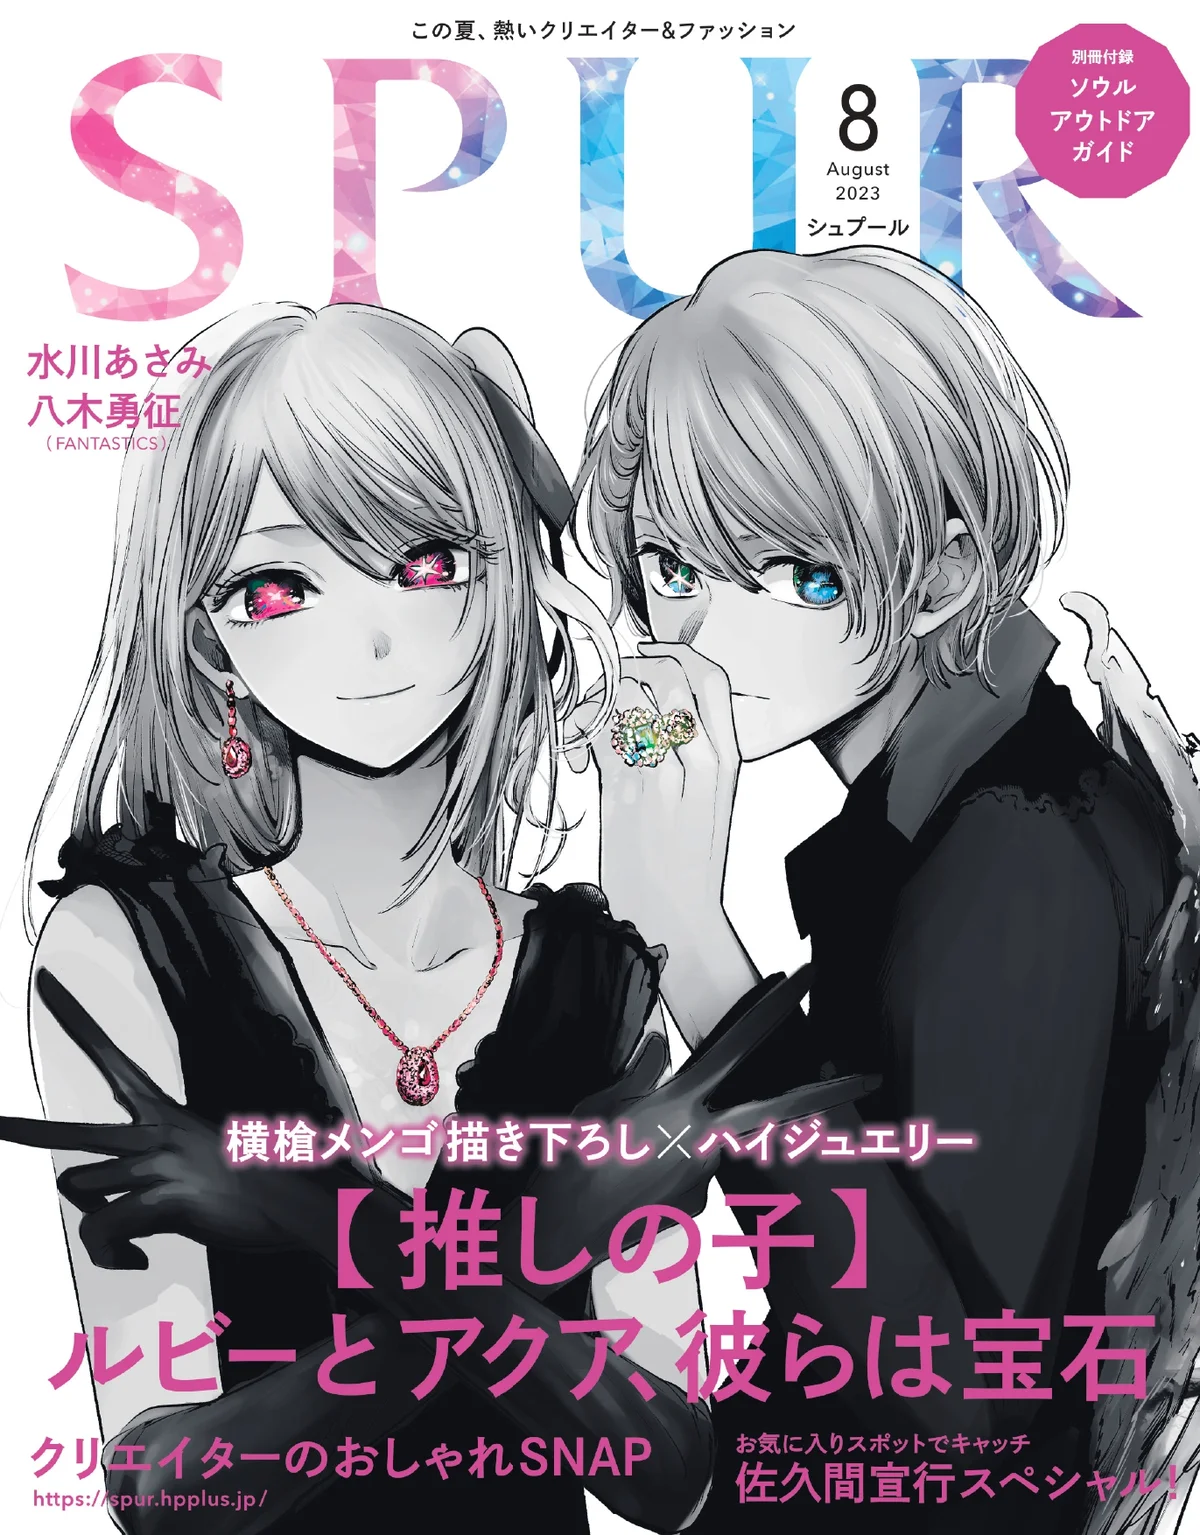 Aqua Hoshino and Ruby Hoshino from OSHI NO KO grace the cover of SPUR magazine for August 2023.